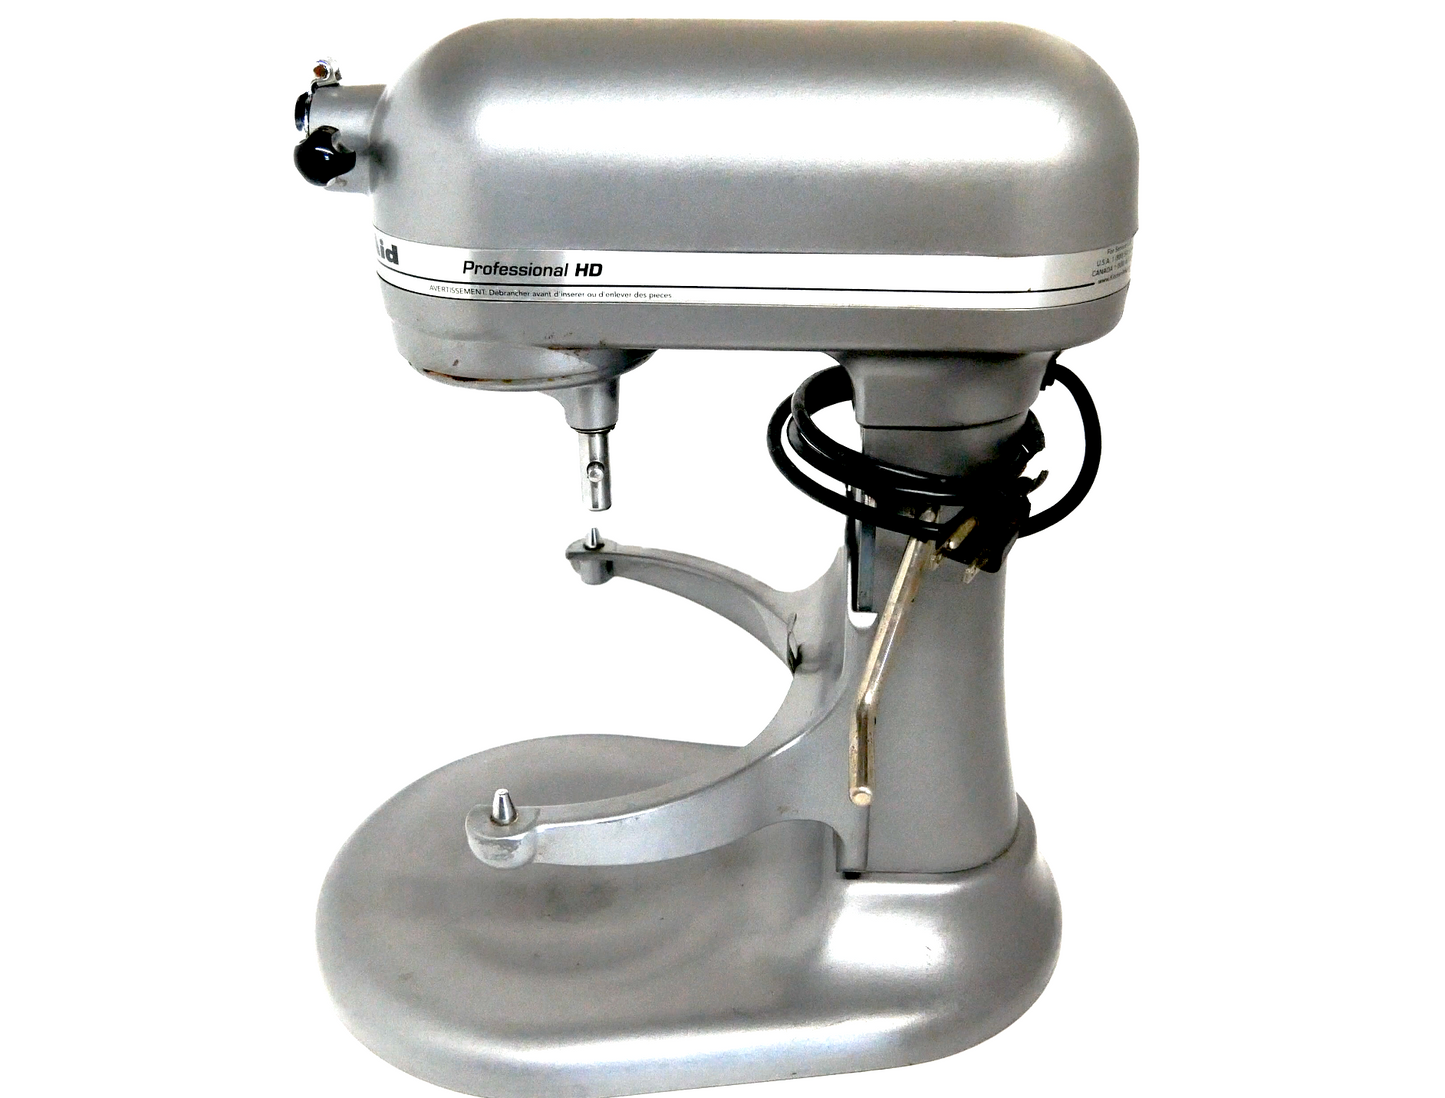 KitchenAid Professional 5 Plus 5 Quart Bowl-Lift Stand Mixer with